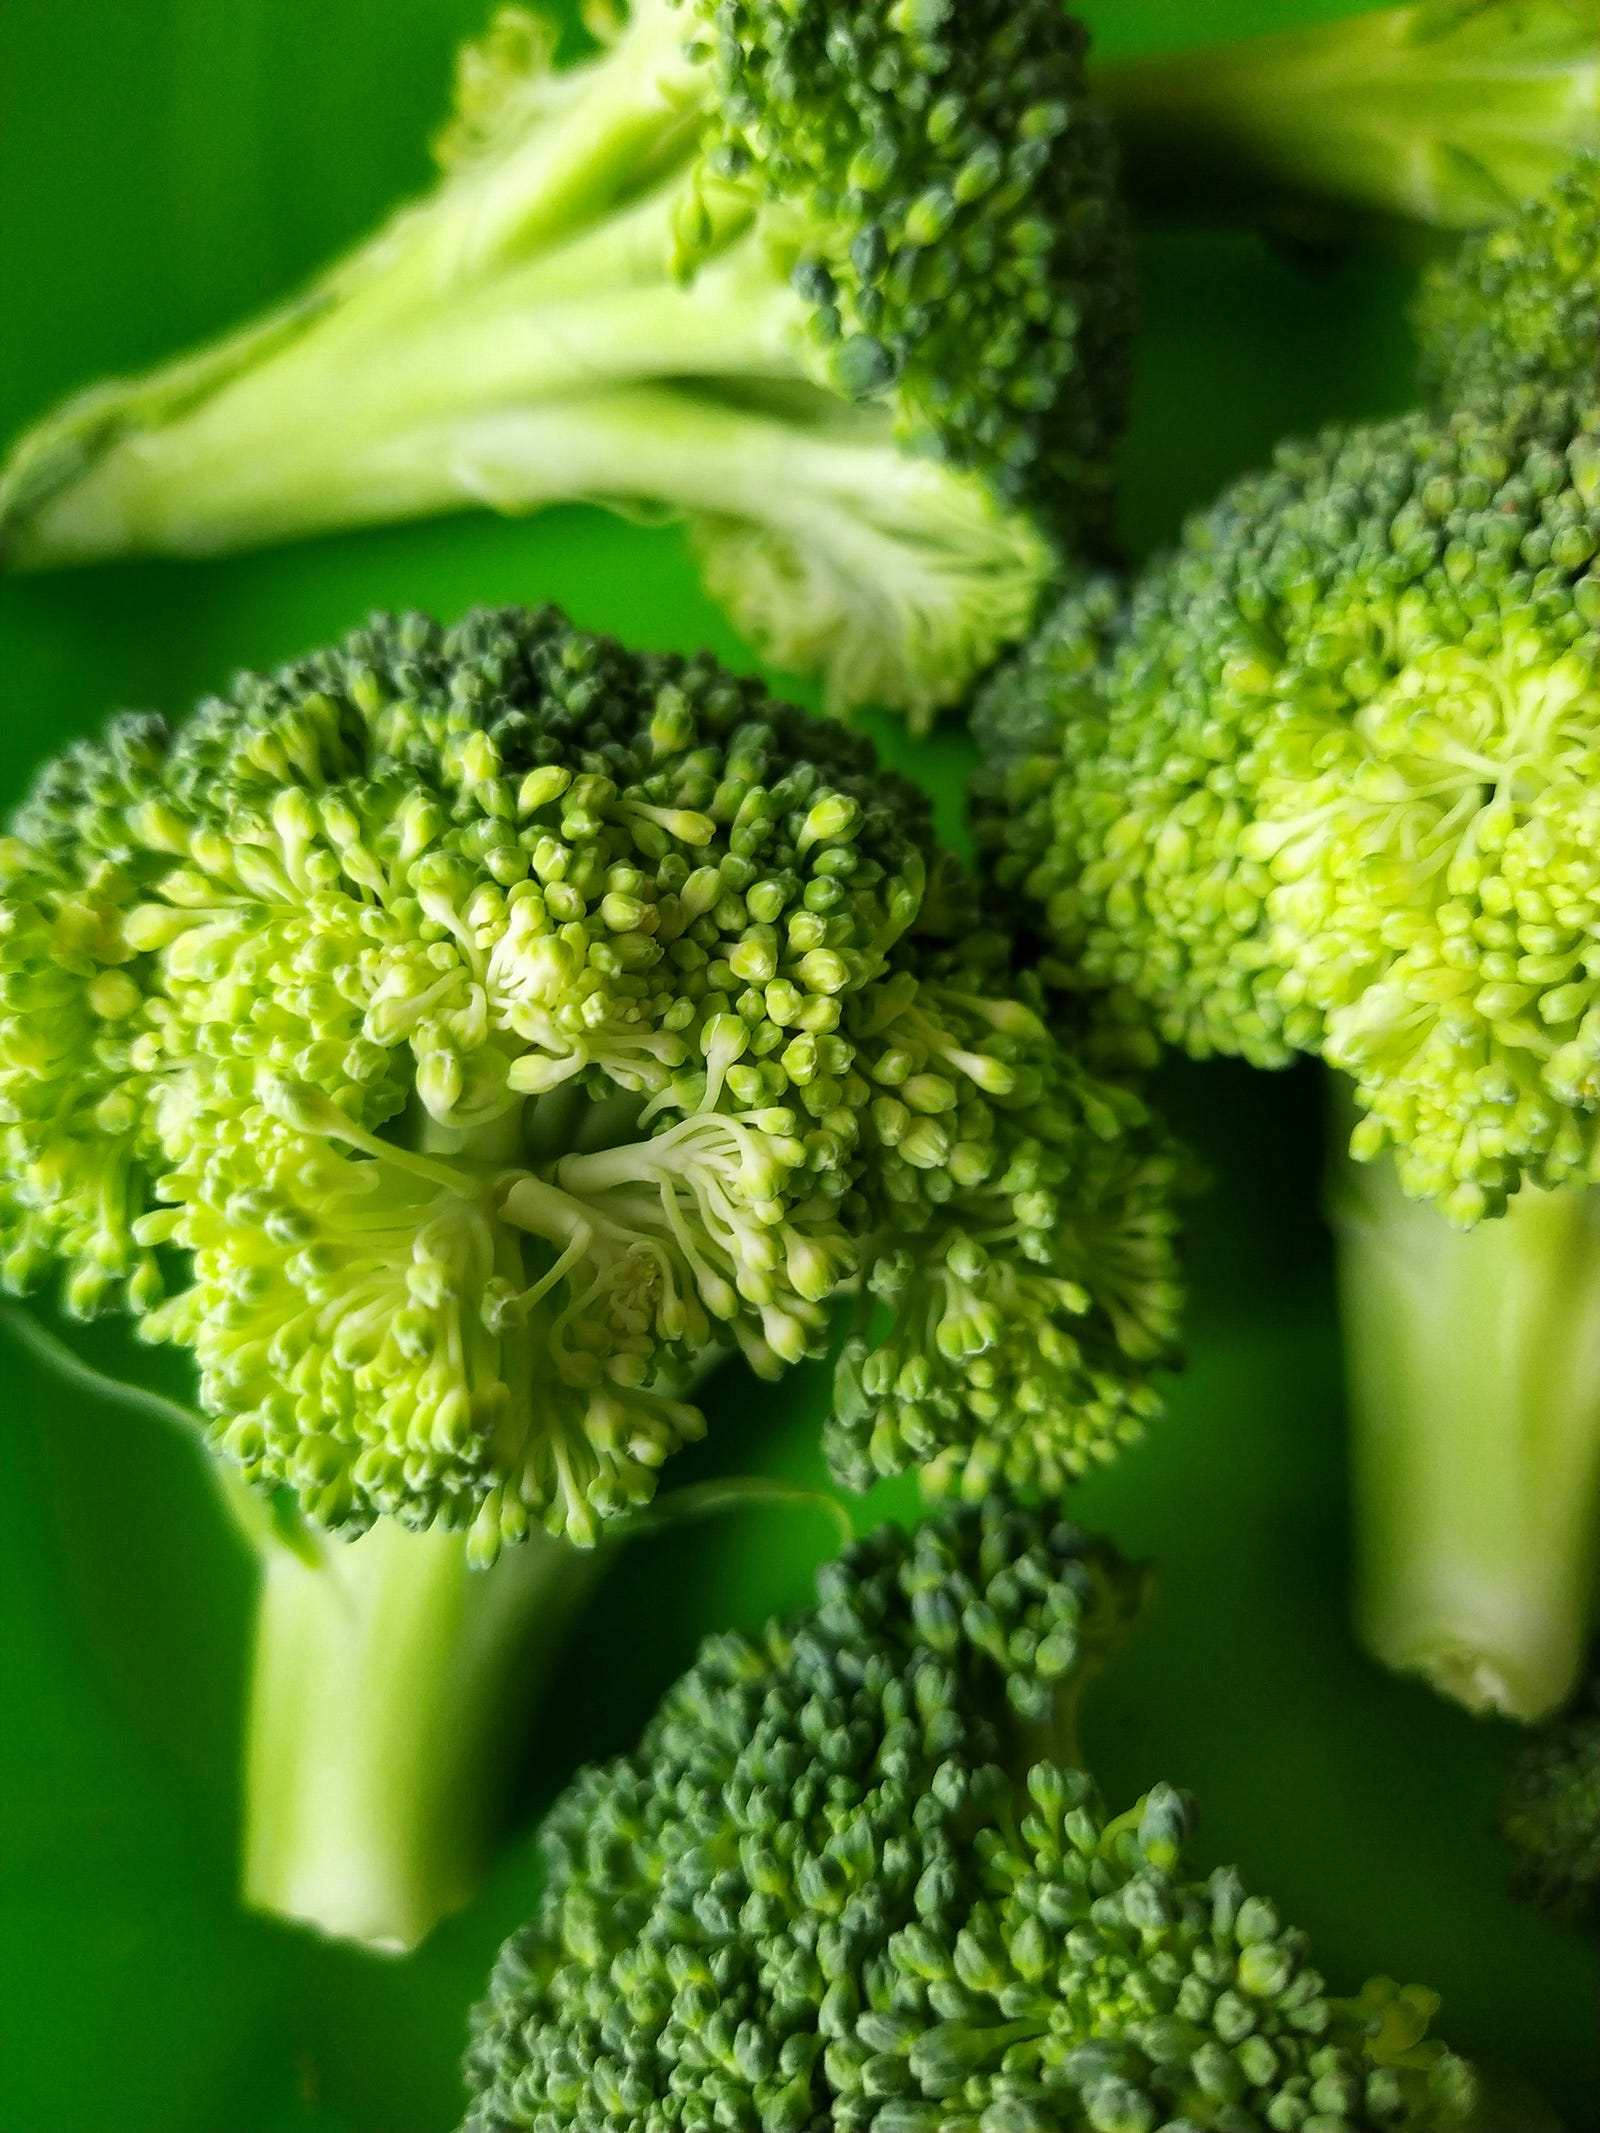 Broccoli in close-up.